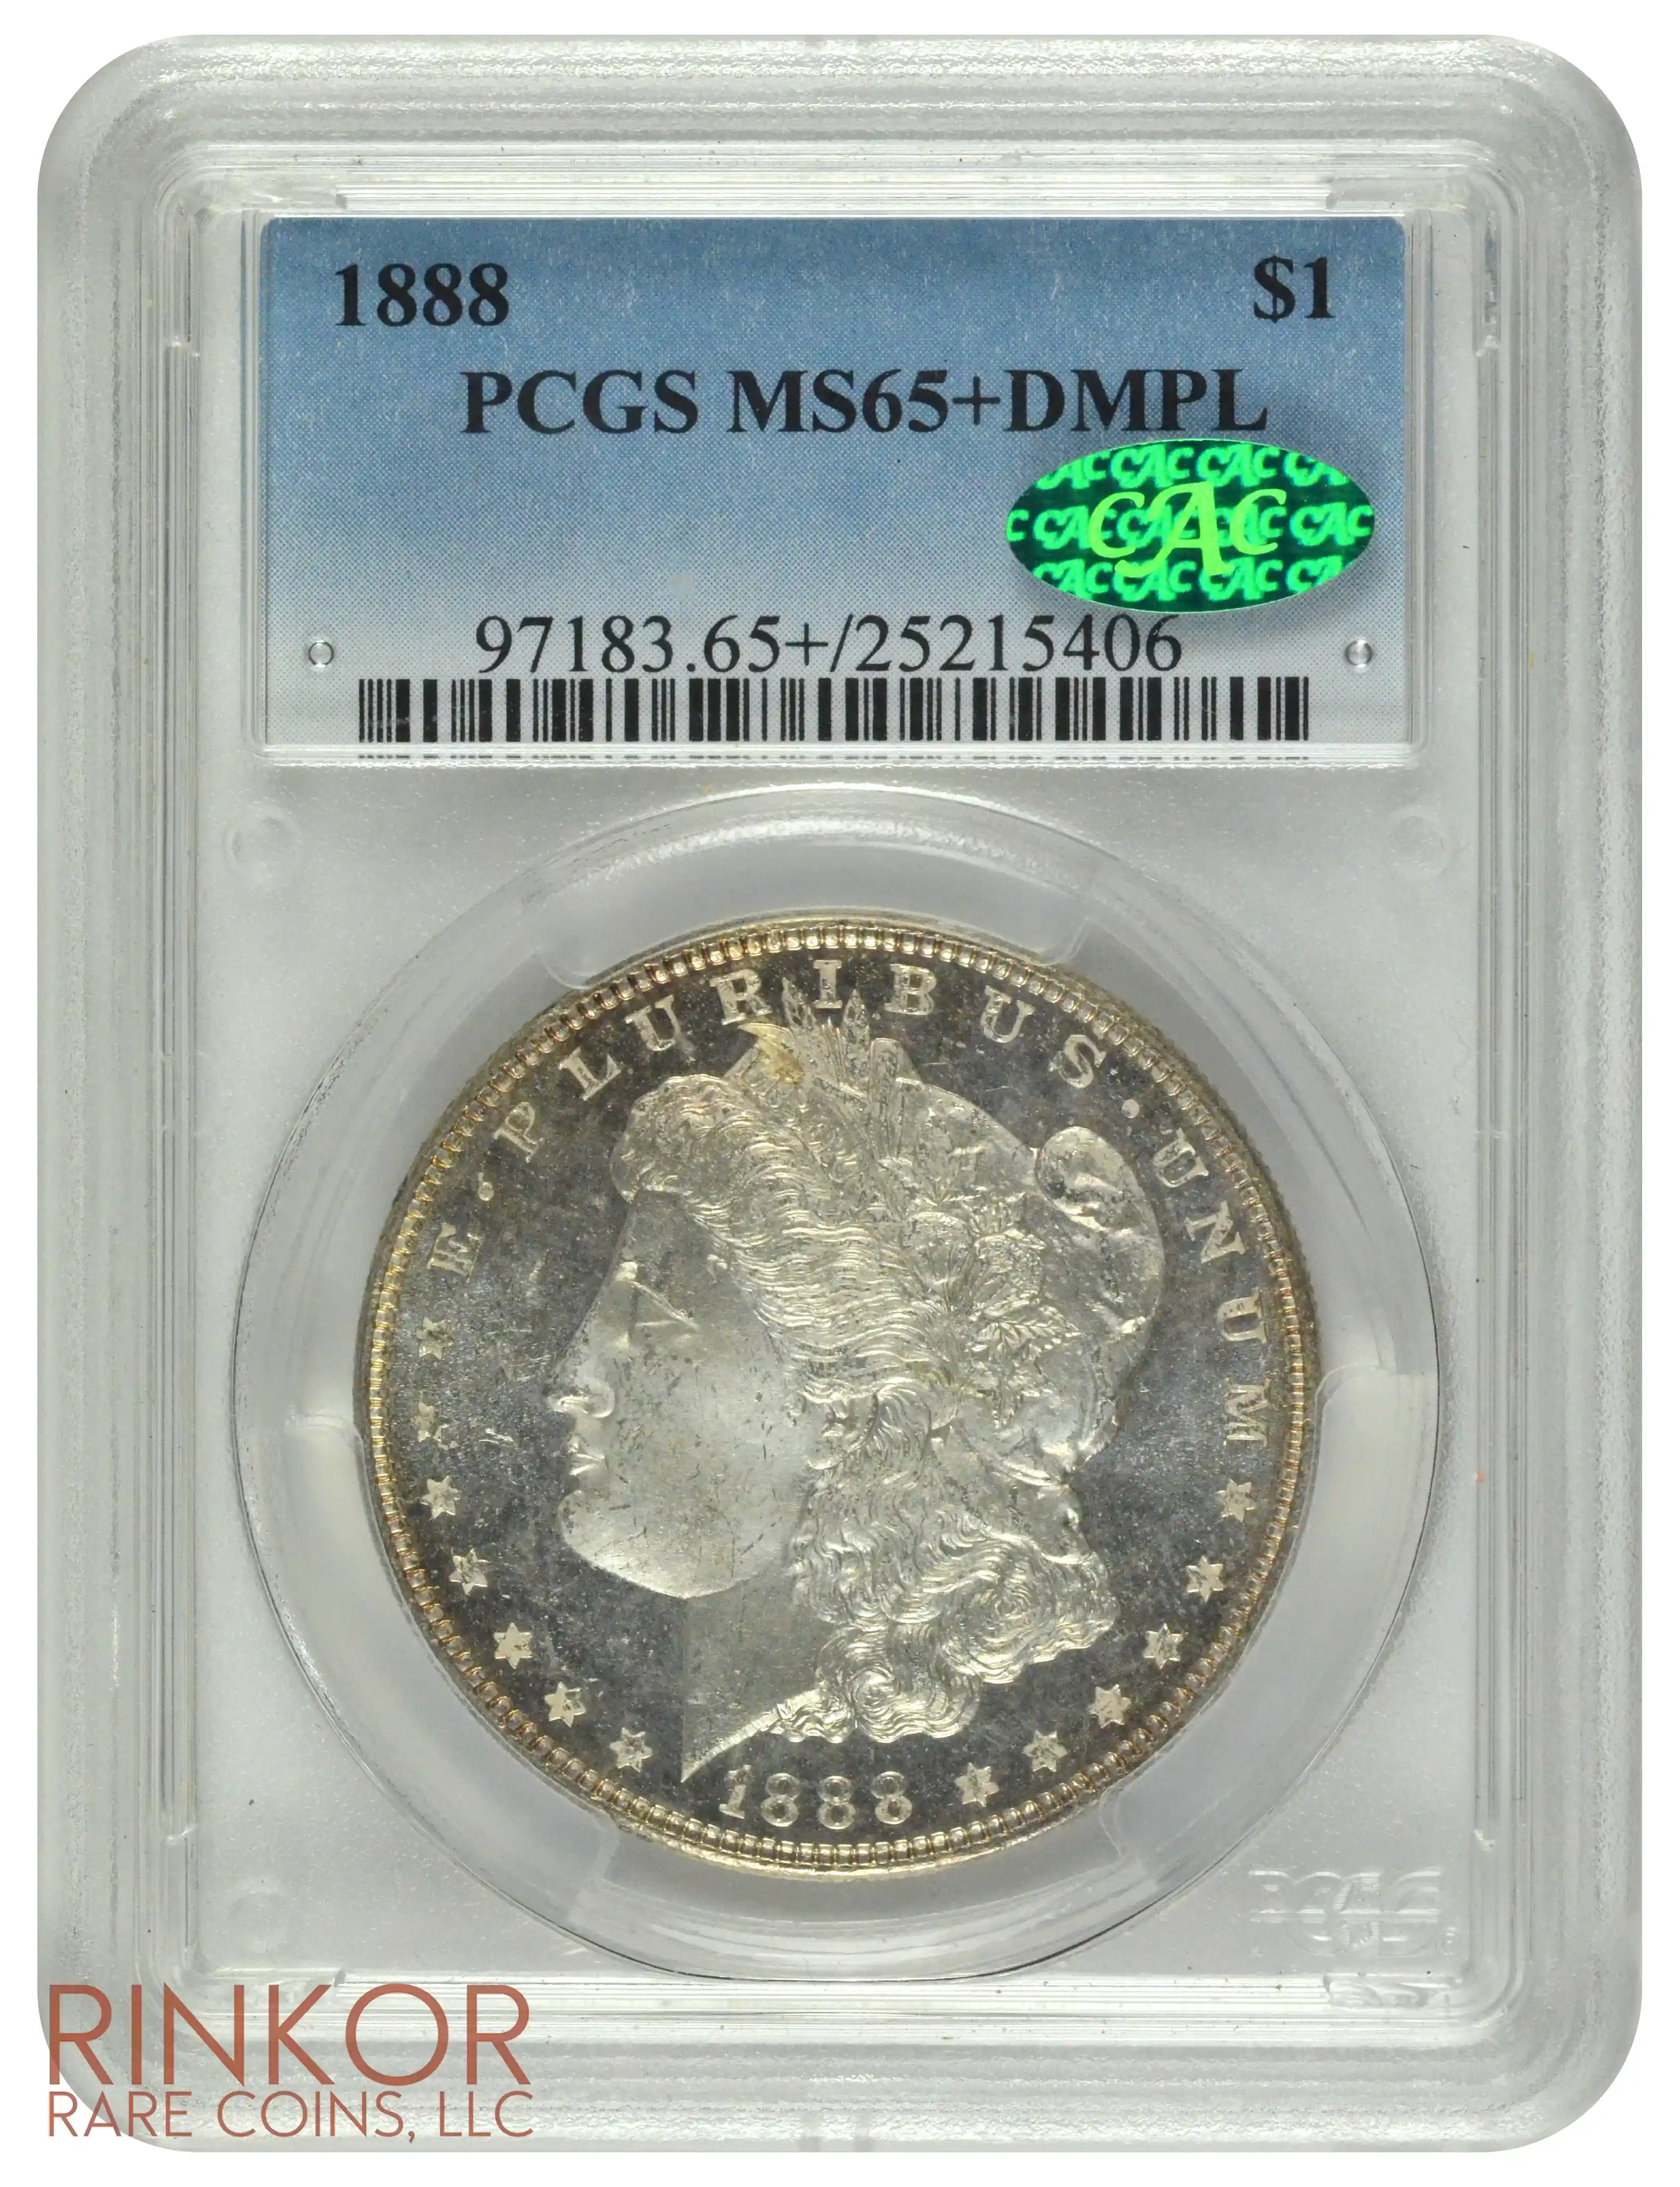 1888 $1 PCGS MS 65+ DMPL CAC